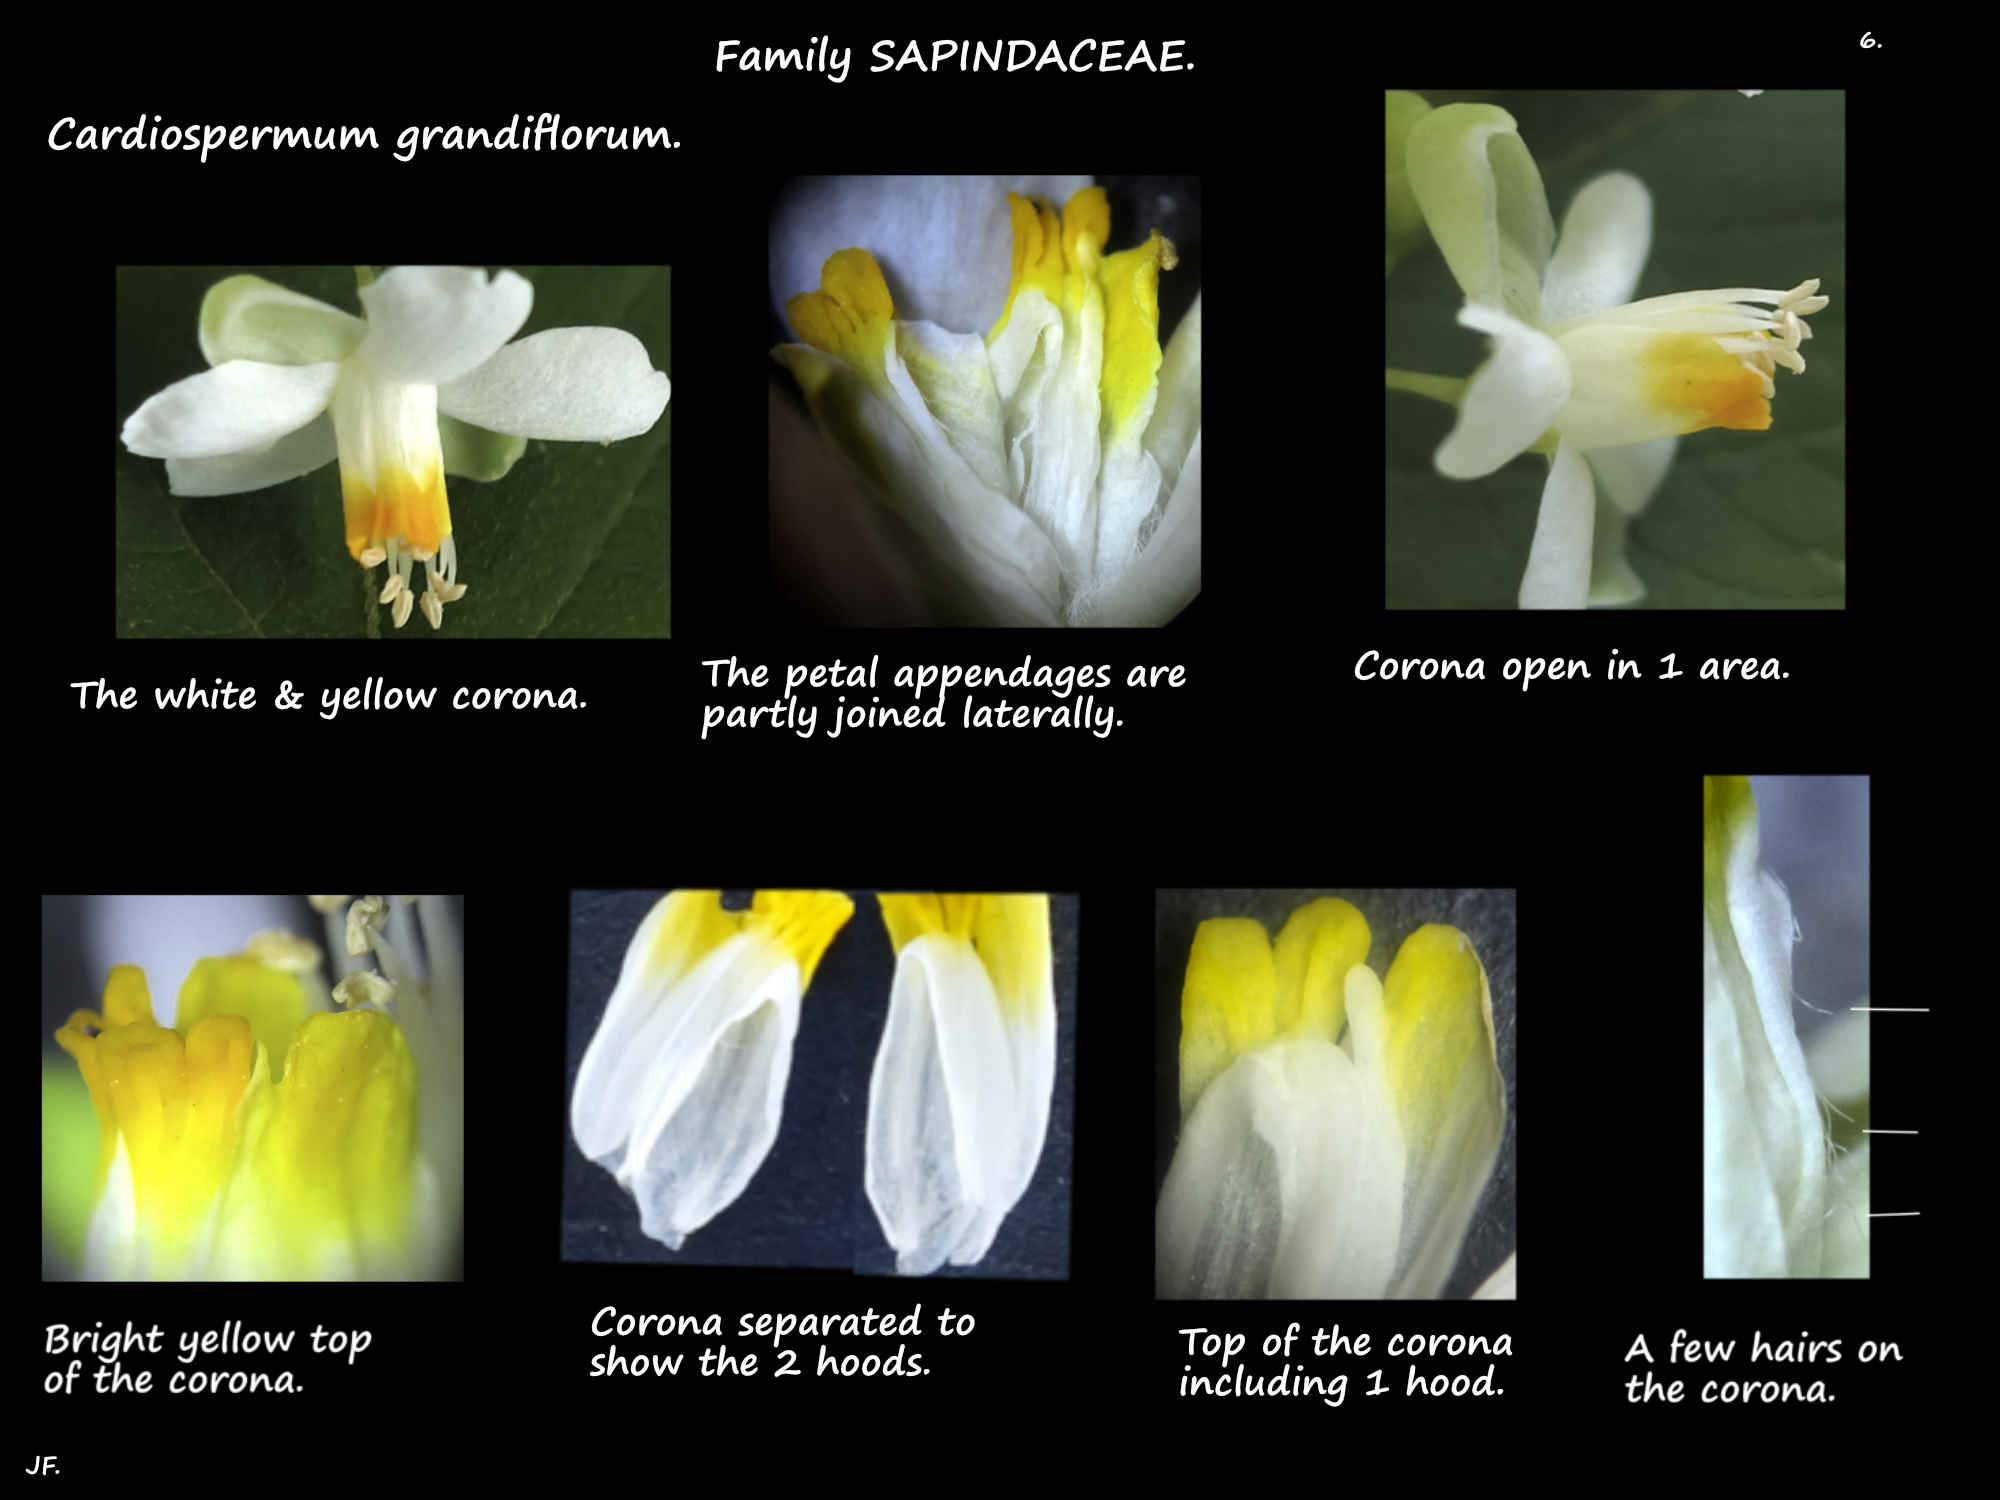 6 The corona of Cardiospermum grandiflorum flowers